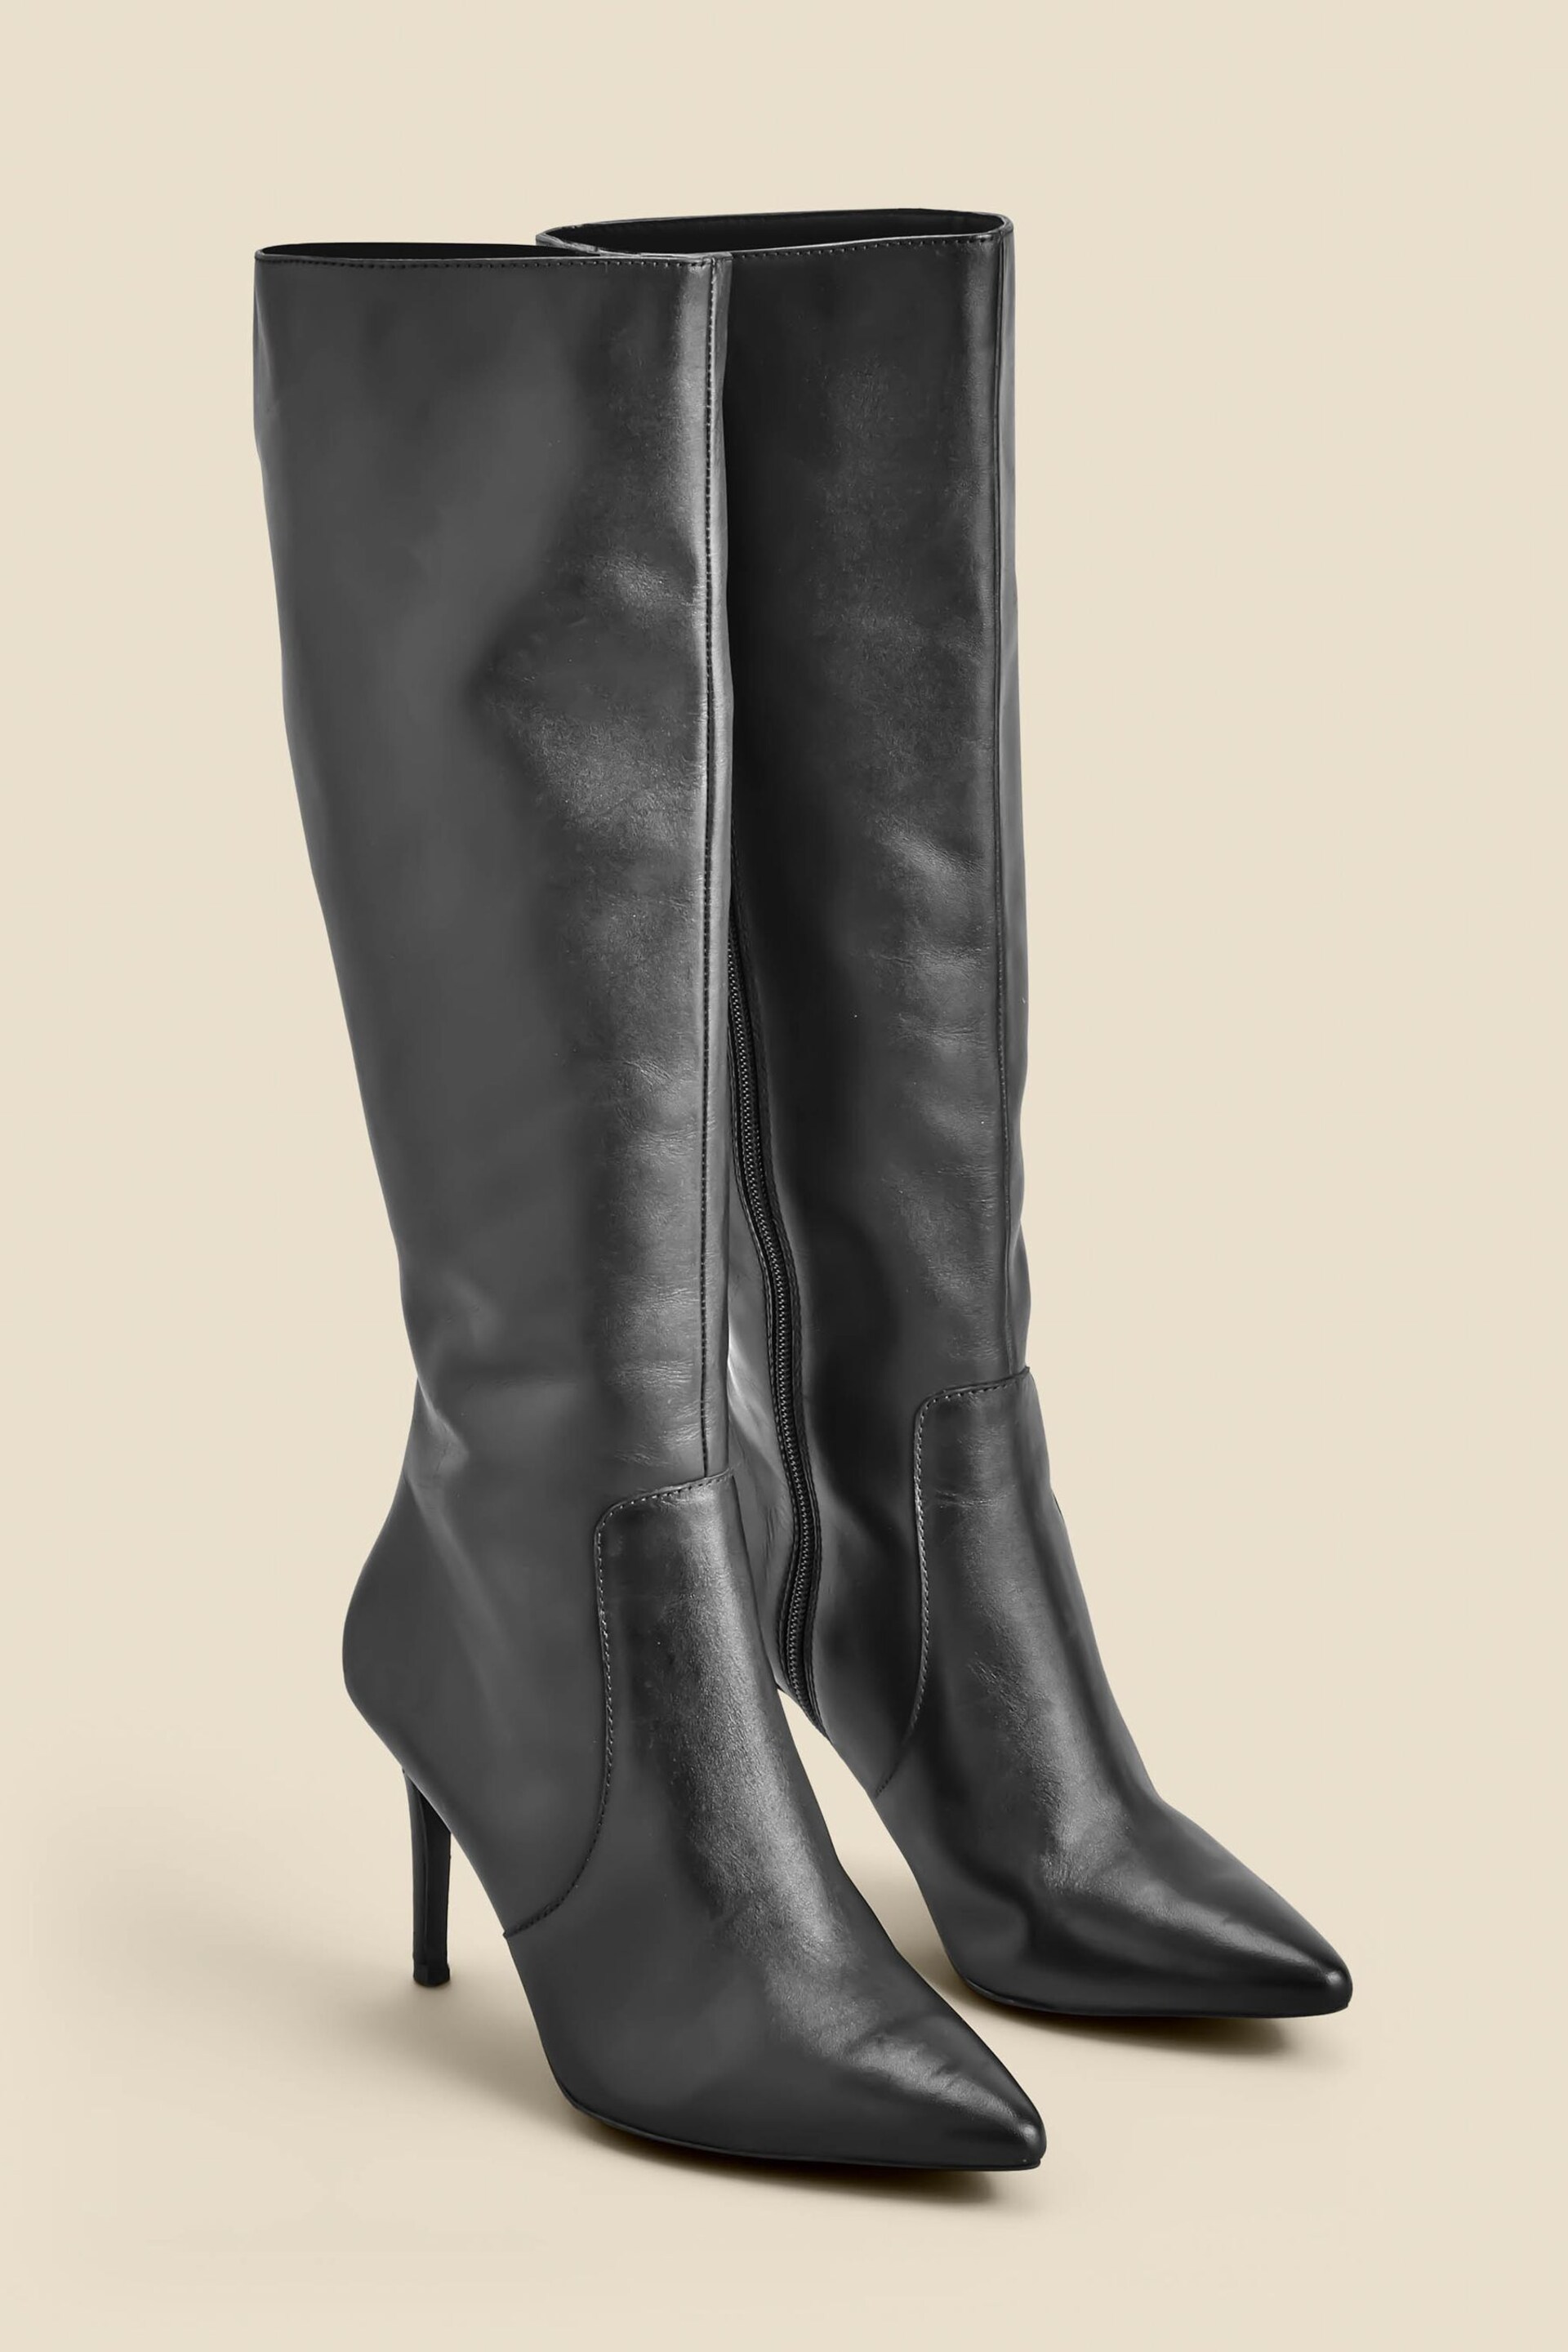 Sosandar Black Leather Stiletto Heel Knee High Boots - Image 4 of 5